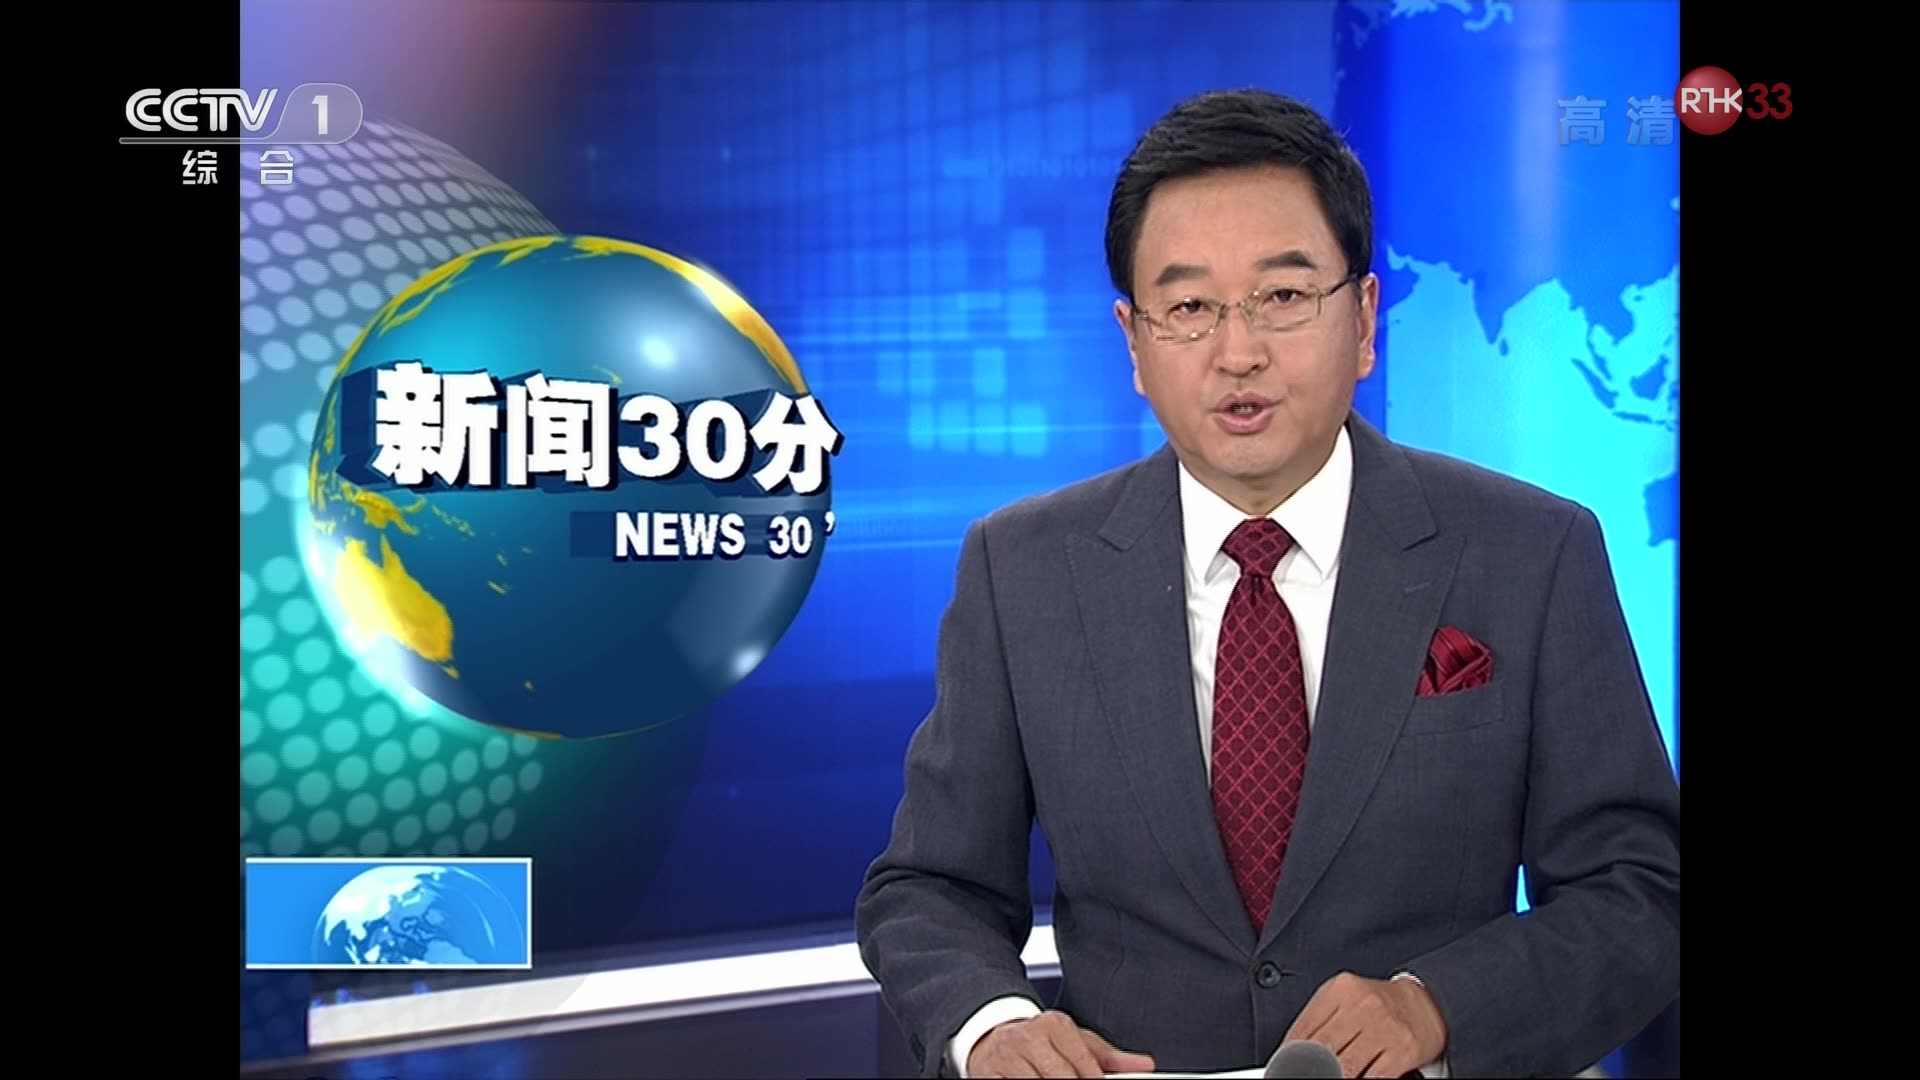 【cctv1】新闻30分